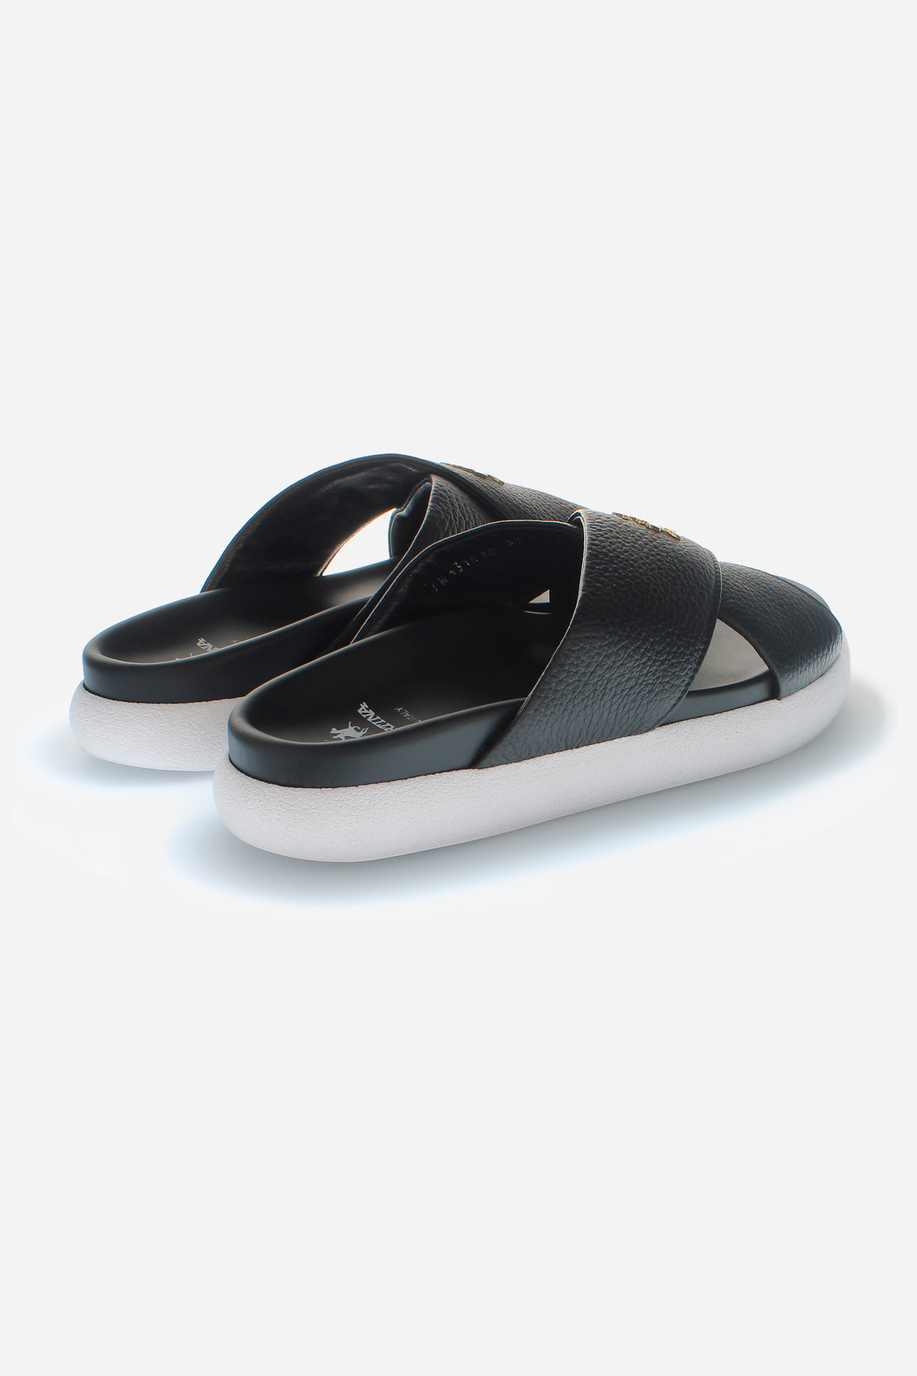 Leather sandals - Footwear | La Martina - Official Online Shop